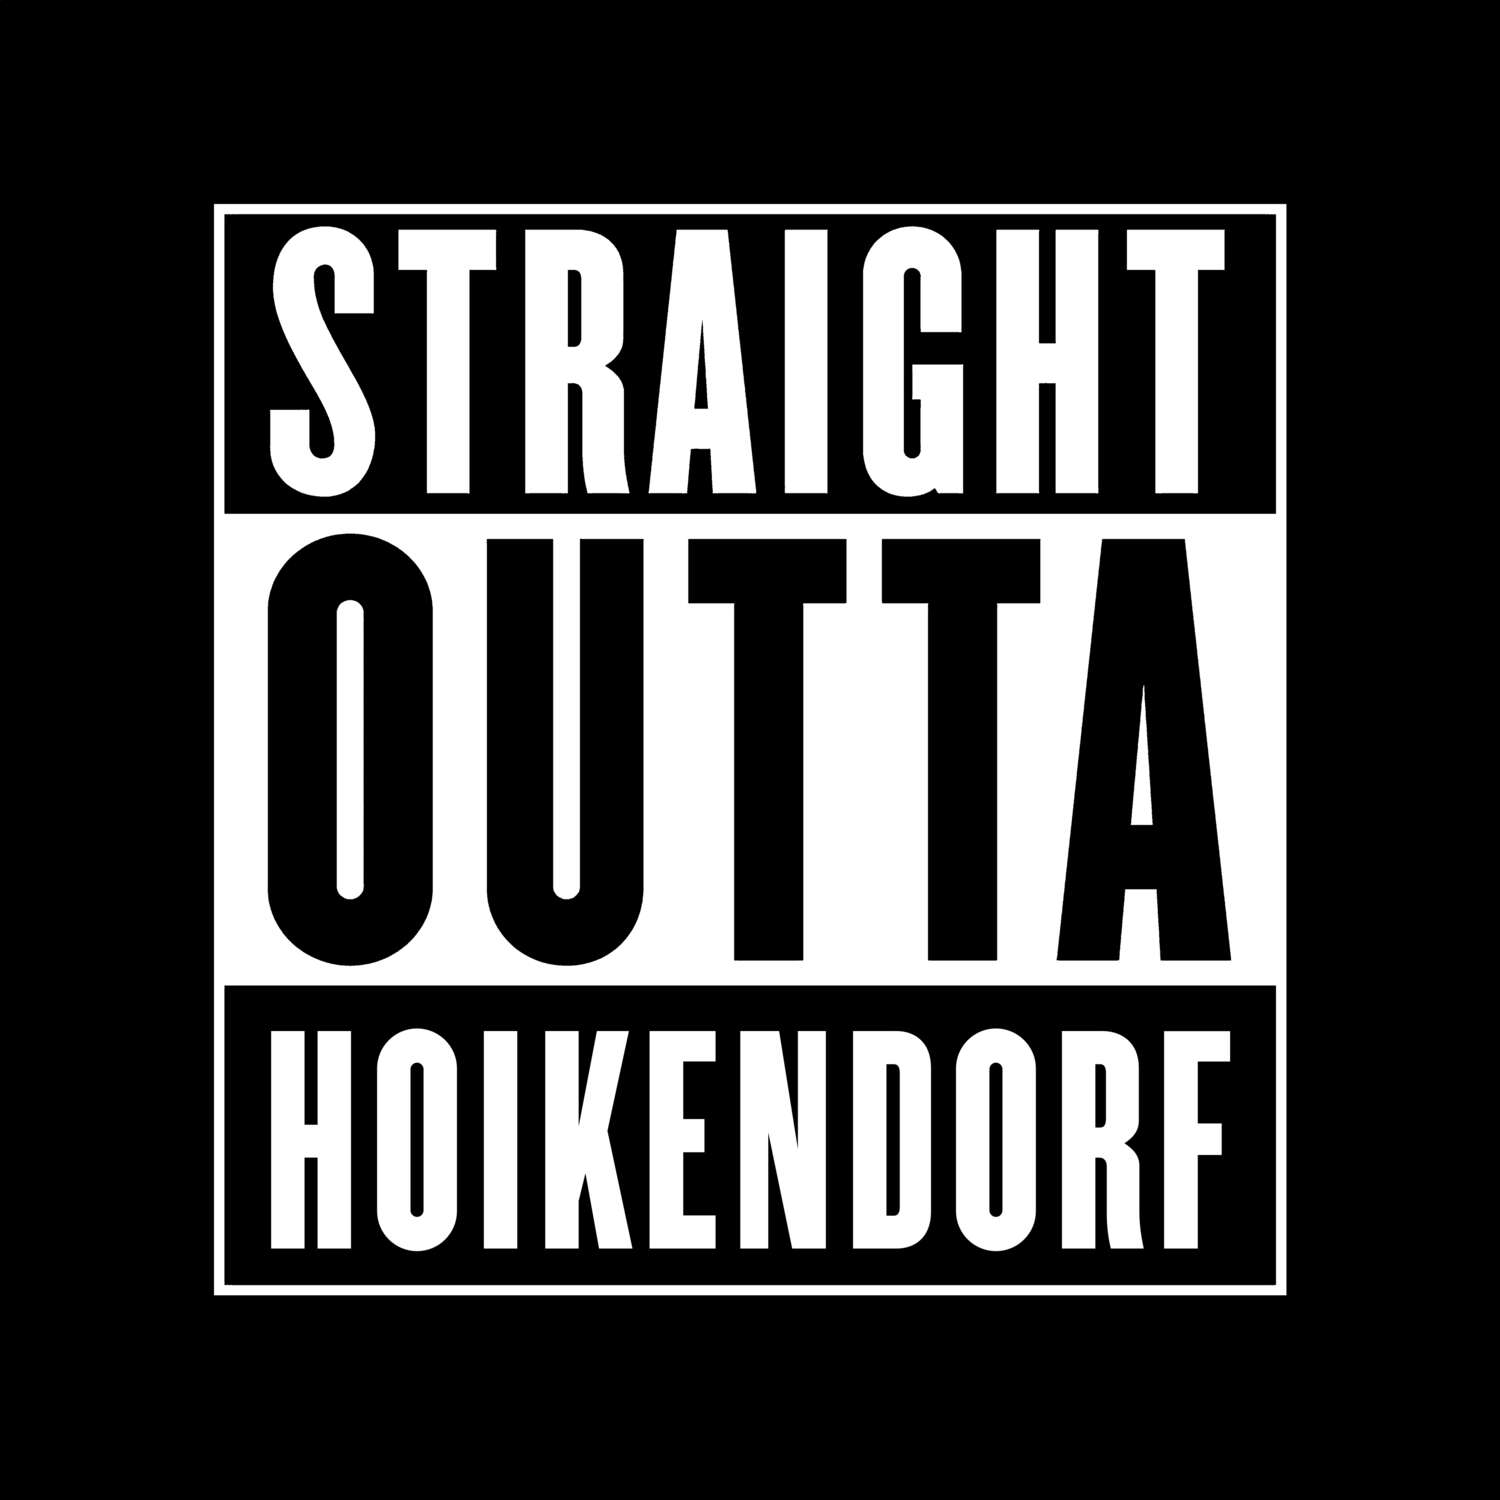 Hoikendorf T-Shirt »Straight Outta«